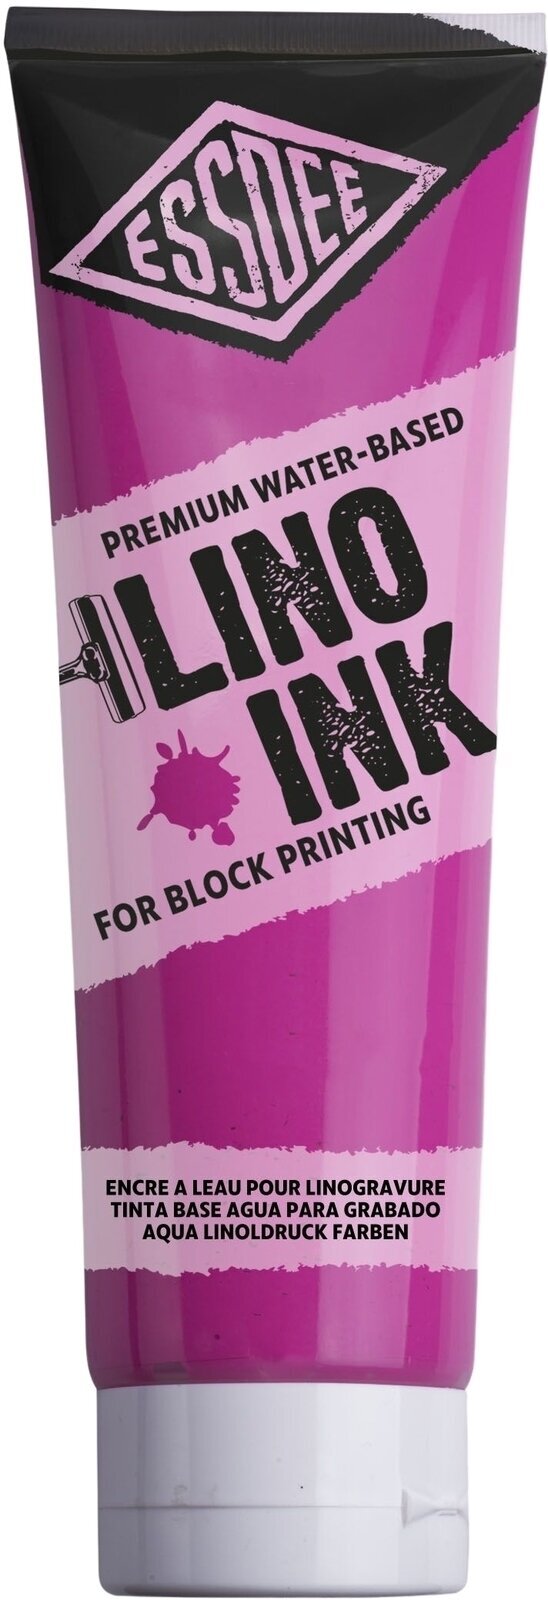 Pintura para linograbado Essdee Block Printing Ink Pintura para linograbado Fluorescent Pink 300 ml